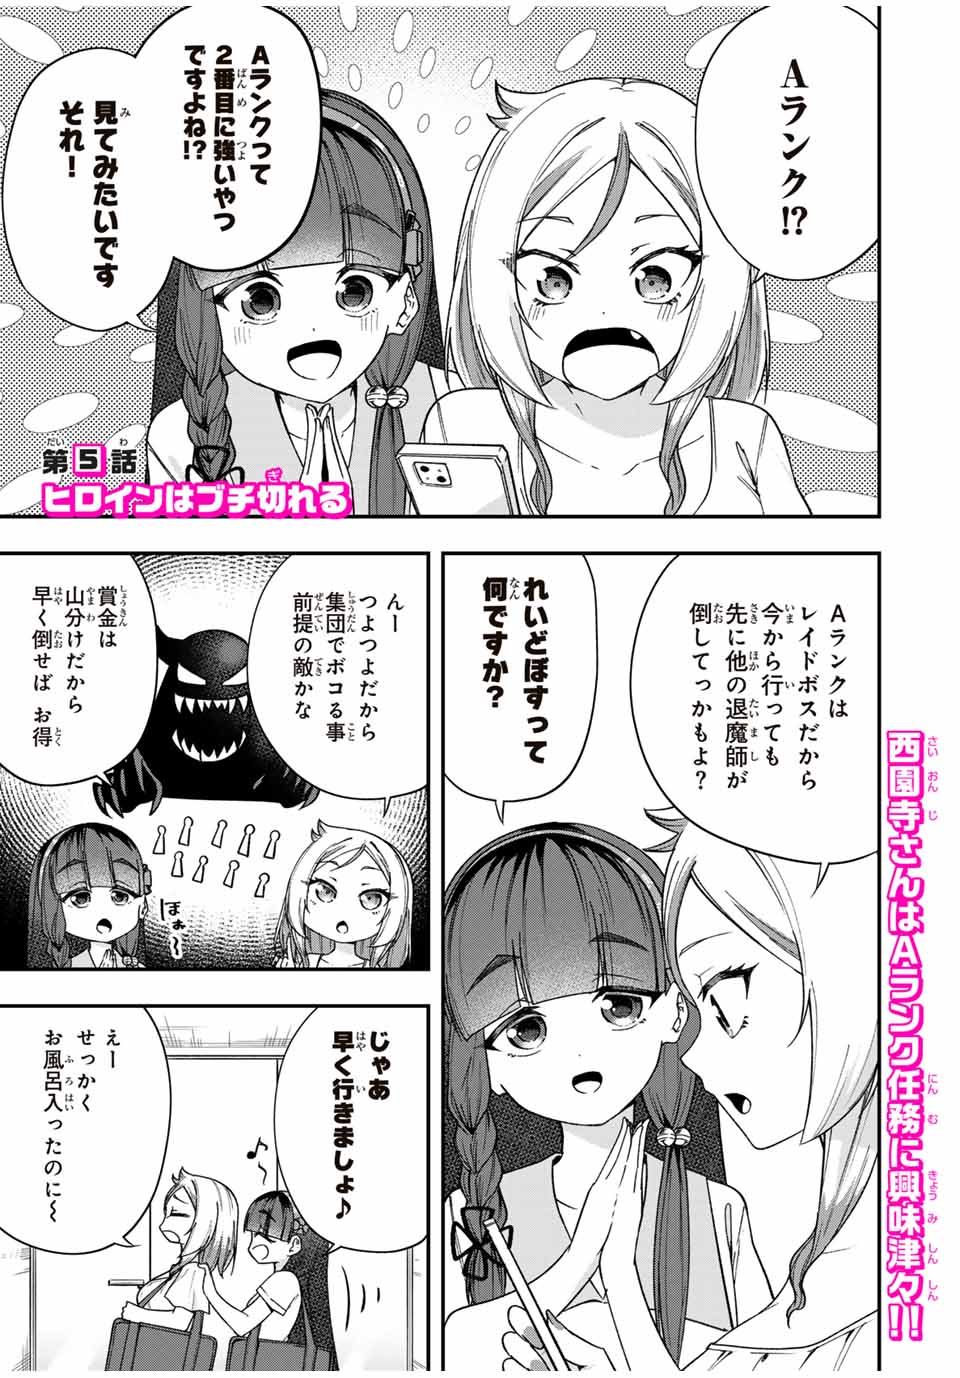 Heroine wa xx Okasegitai - Chapter 5 - Page 1